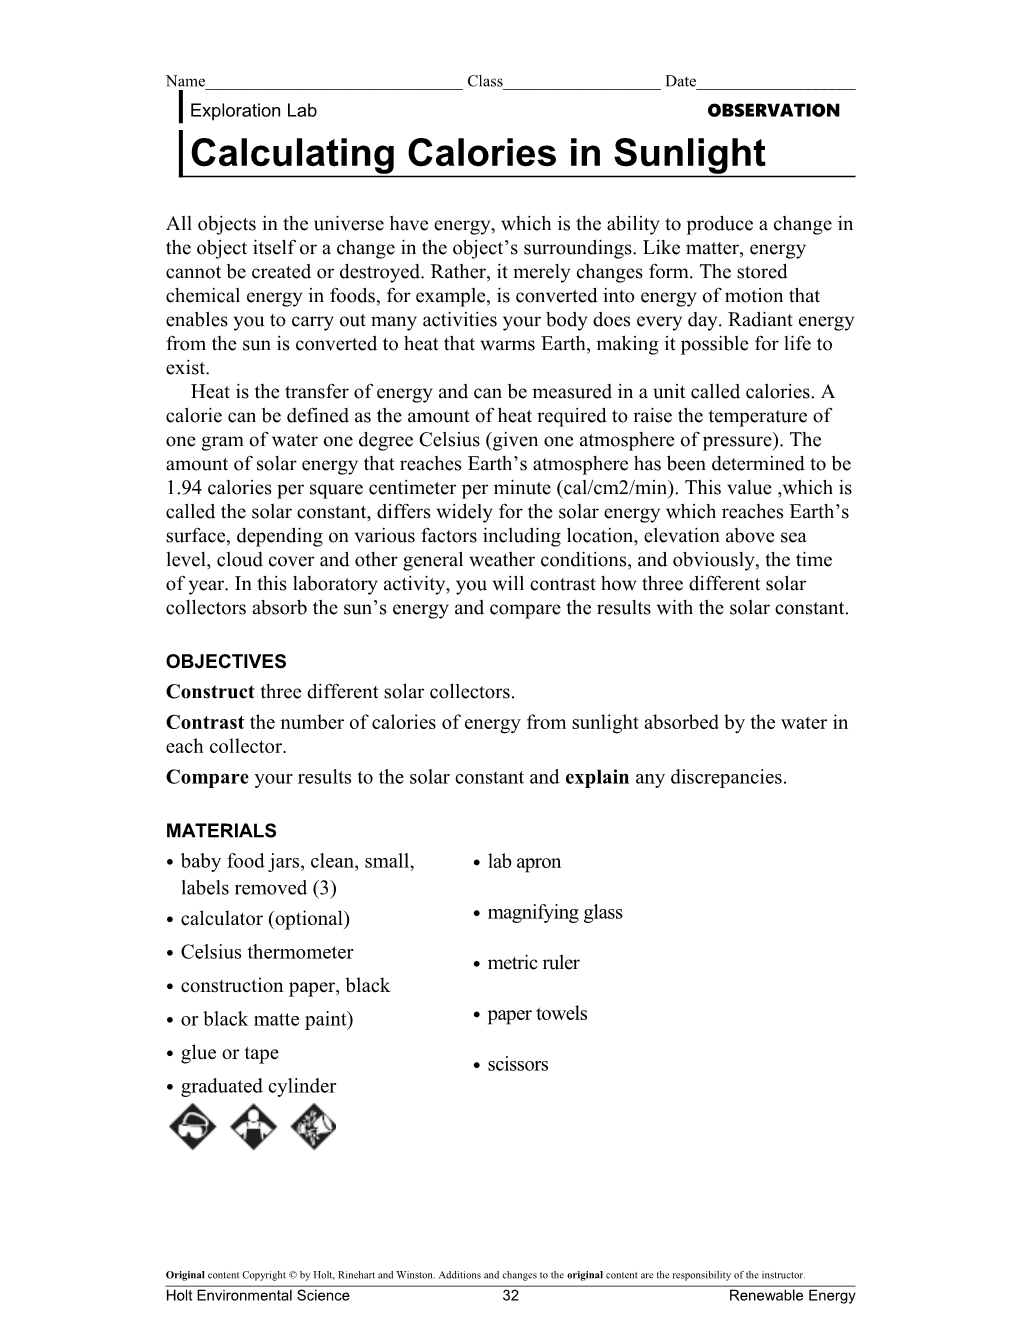 Calculating Calories in Sunlight